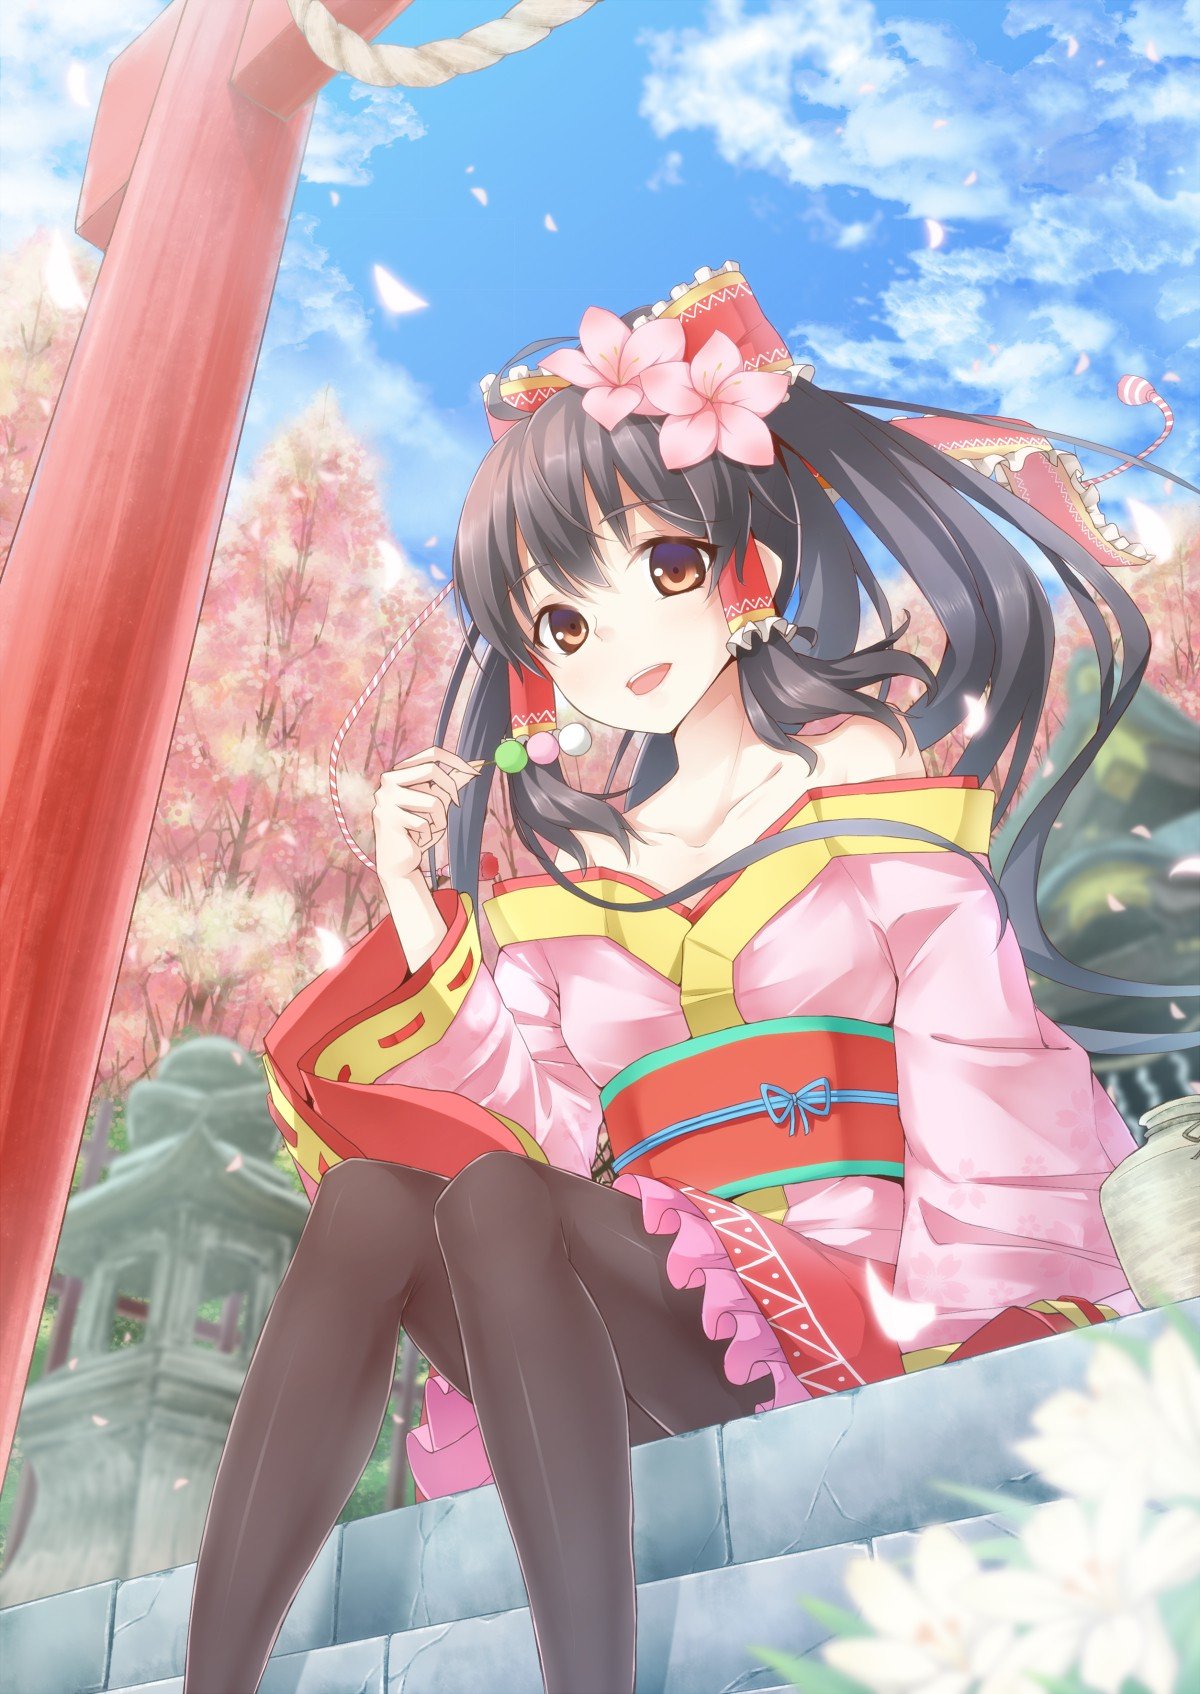 Touhou, Hakurei Reimu, Kimono, Traditional clothing, Trees, Petals, Sky, Clouds, Anime girls, Anime Wallpaper